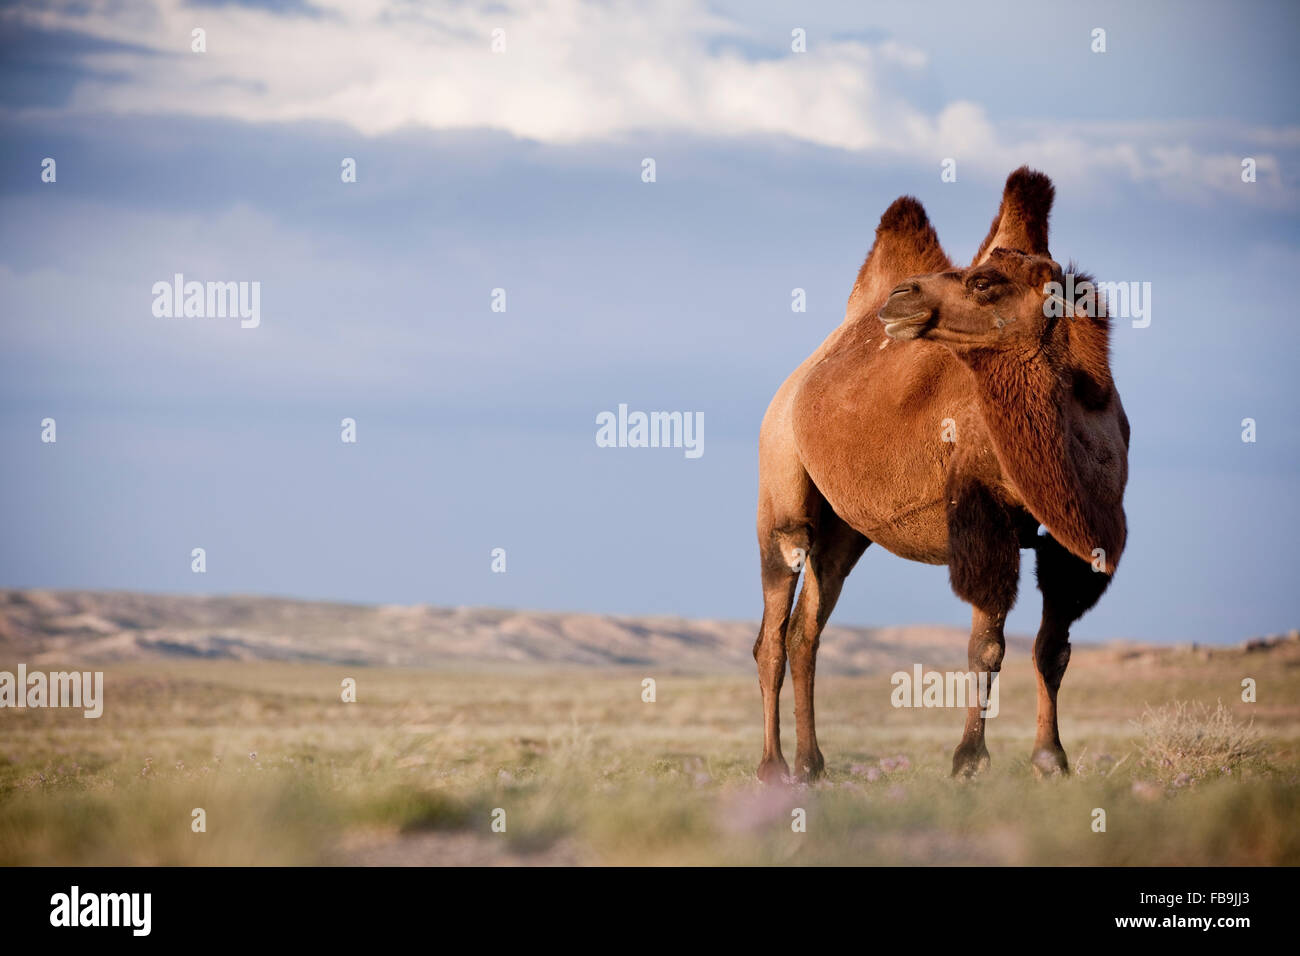 A Bactrian camel in the Gobi Desert, Mongolia. Stock Photo